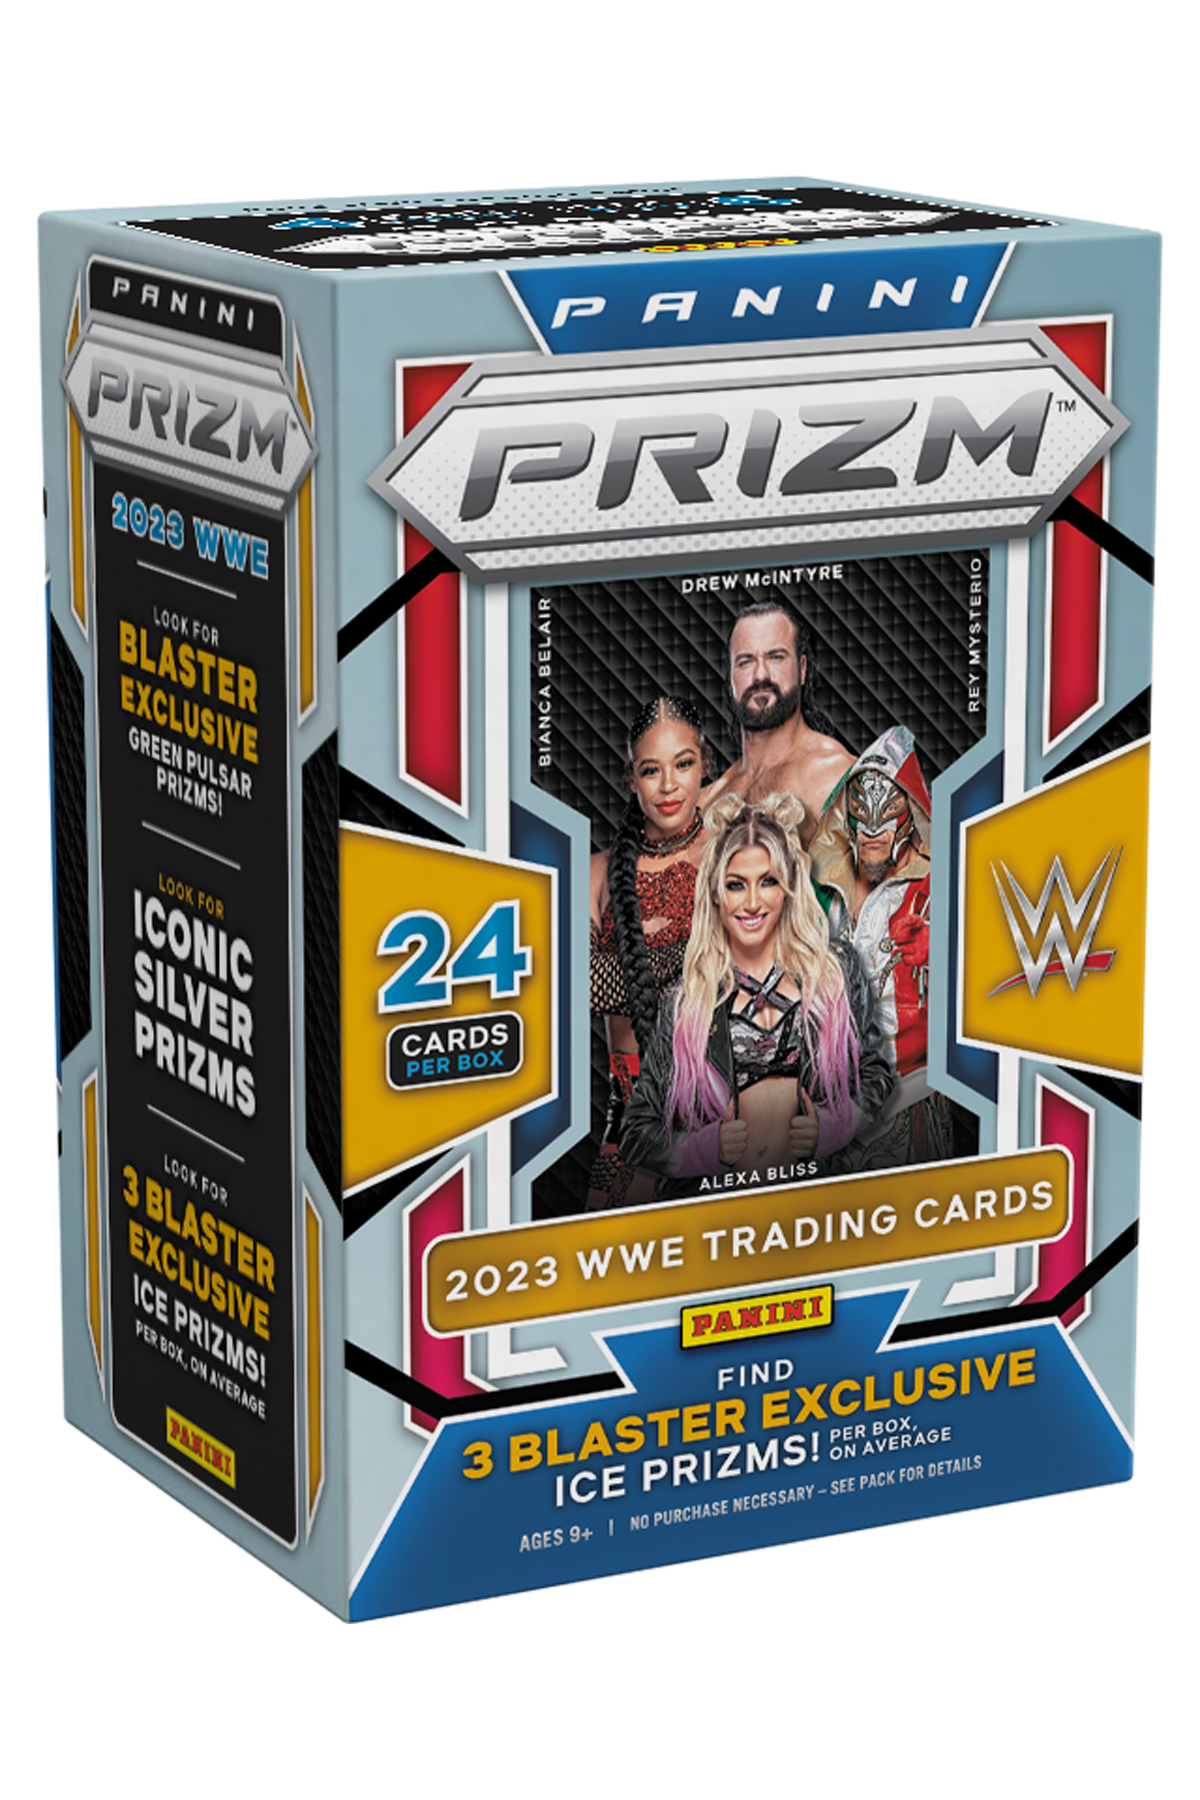 https://media.gamestop.com/i/gamestop/20007945/Panini-Prizm-WWE-Wrestling-Blaster-Box?$pdp$